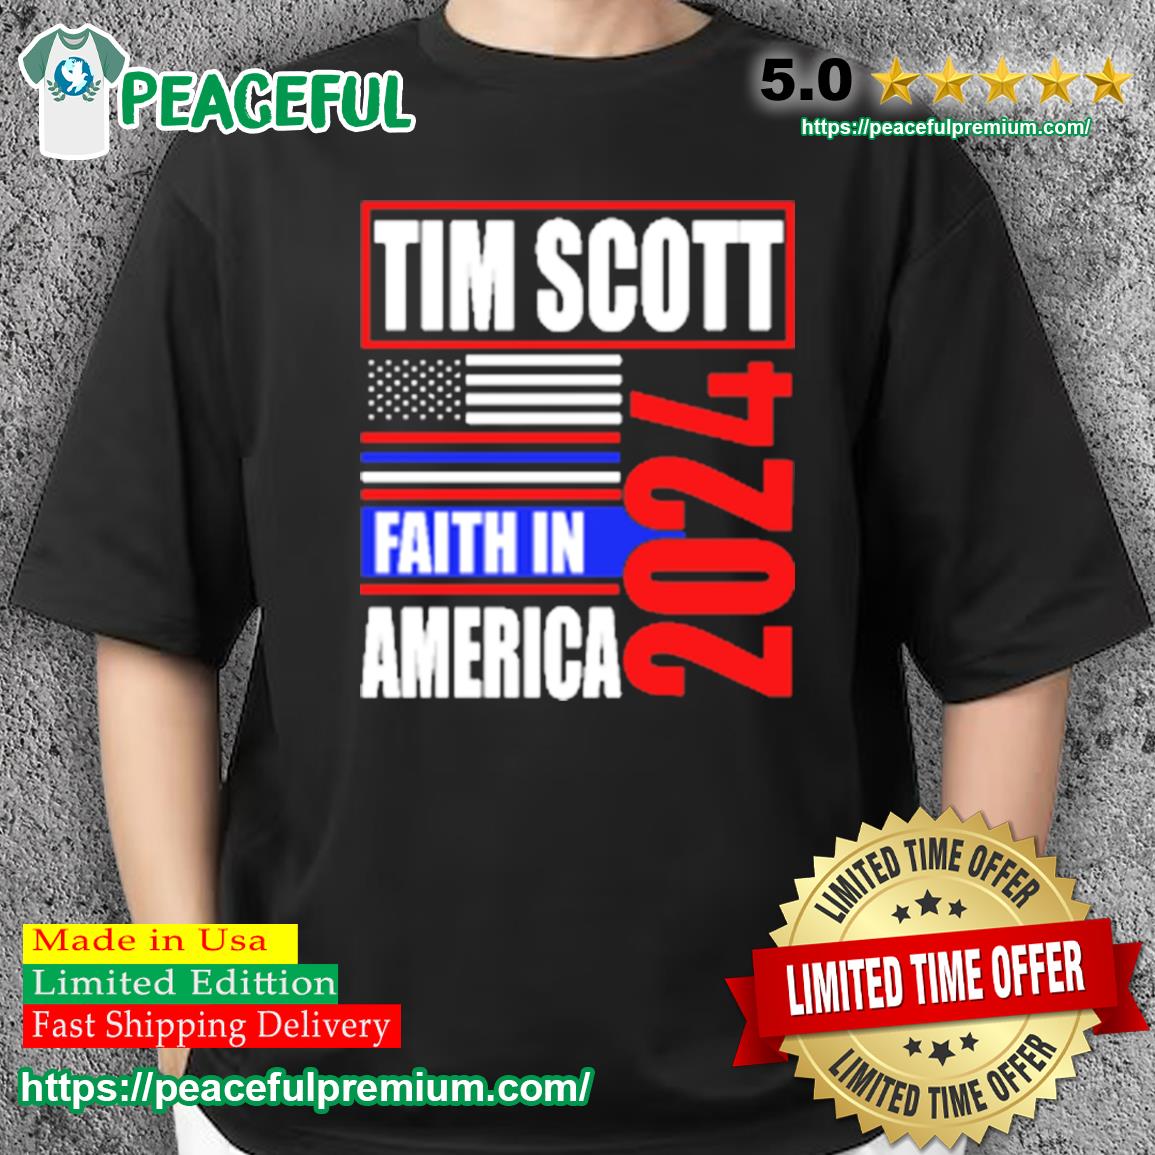 Tim Scott 2024 Faith In American Shirt